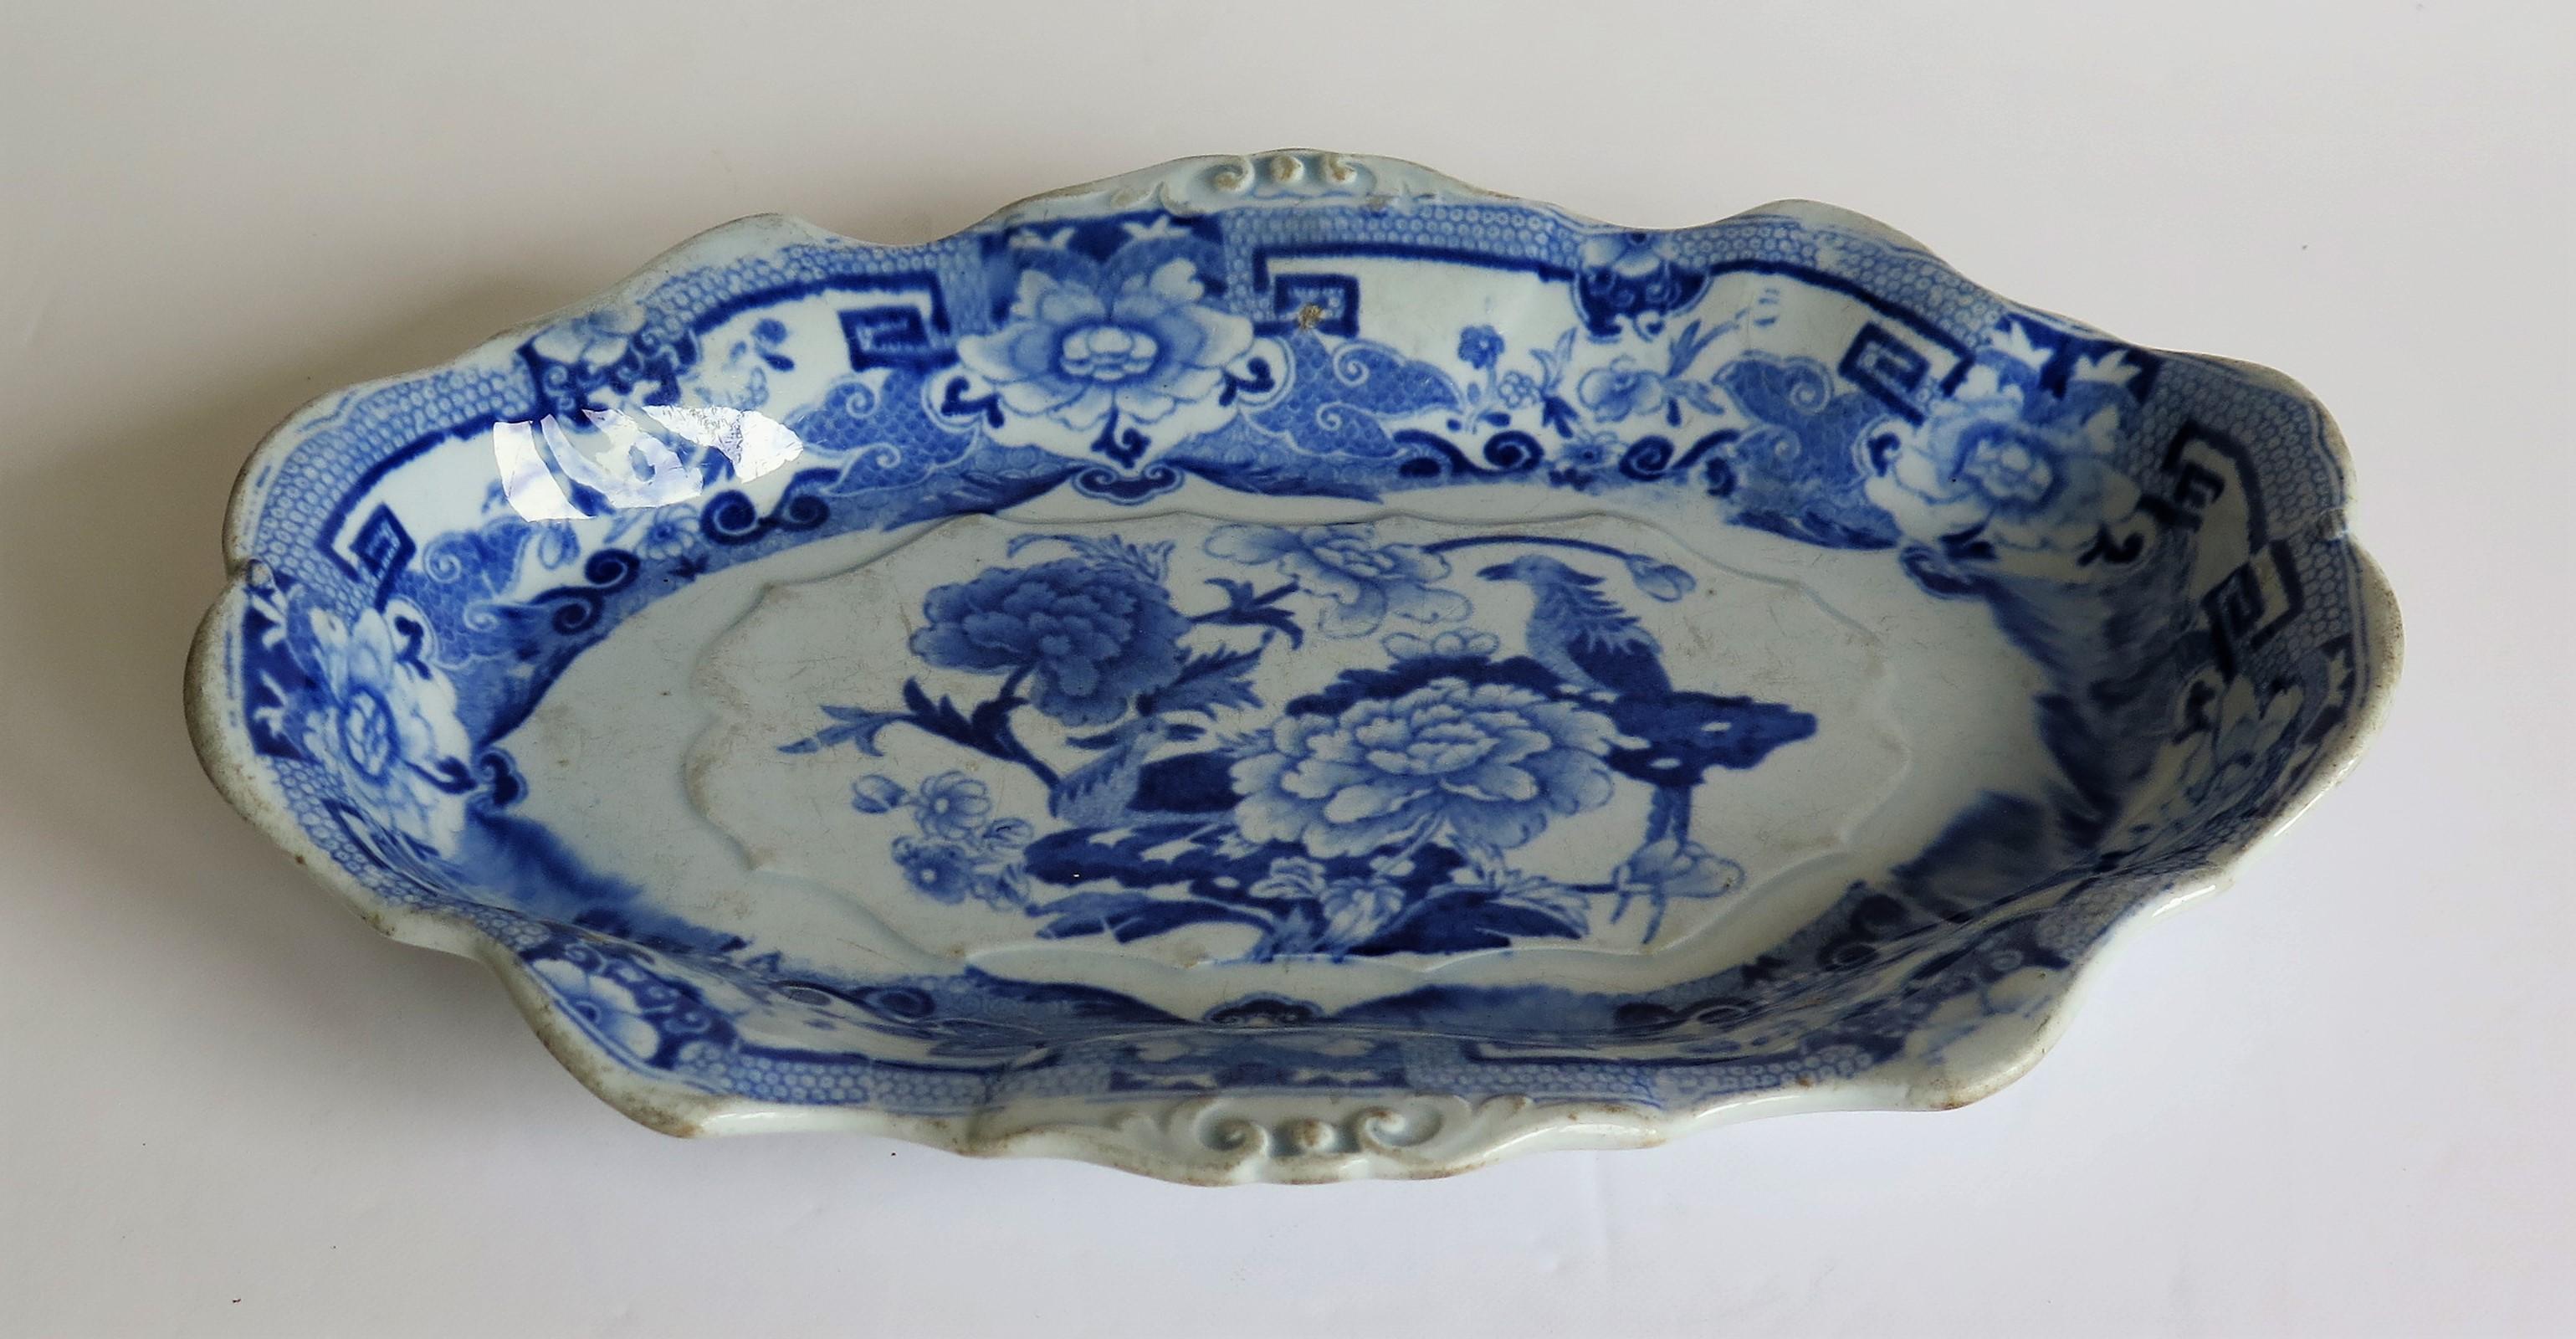 Chinoiserie Mason's Ironstone Serving Dish Blue and White India Pheasants Pattern, circa 1820